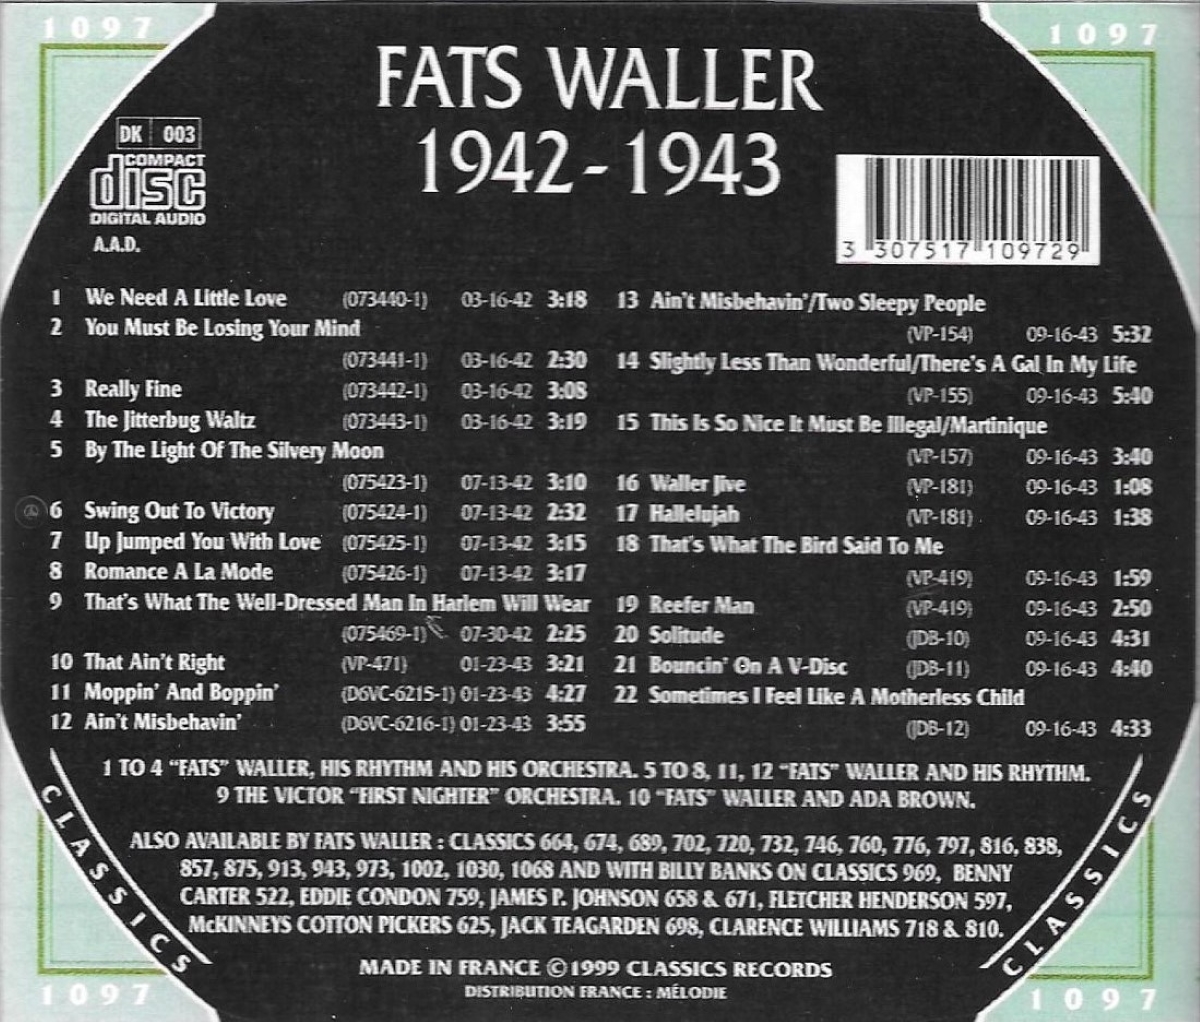 The Chronological Fats Waller-1942-1943